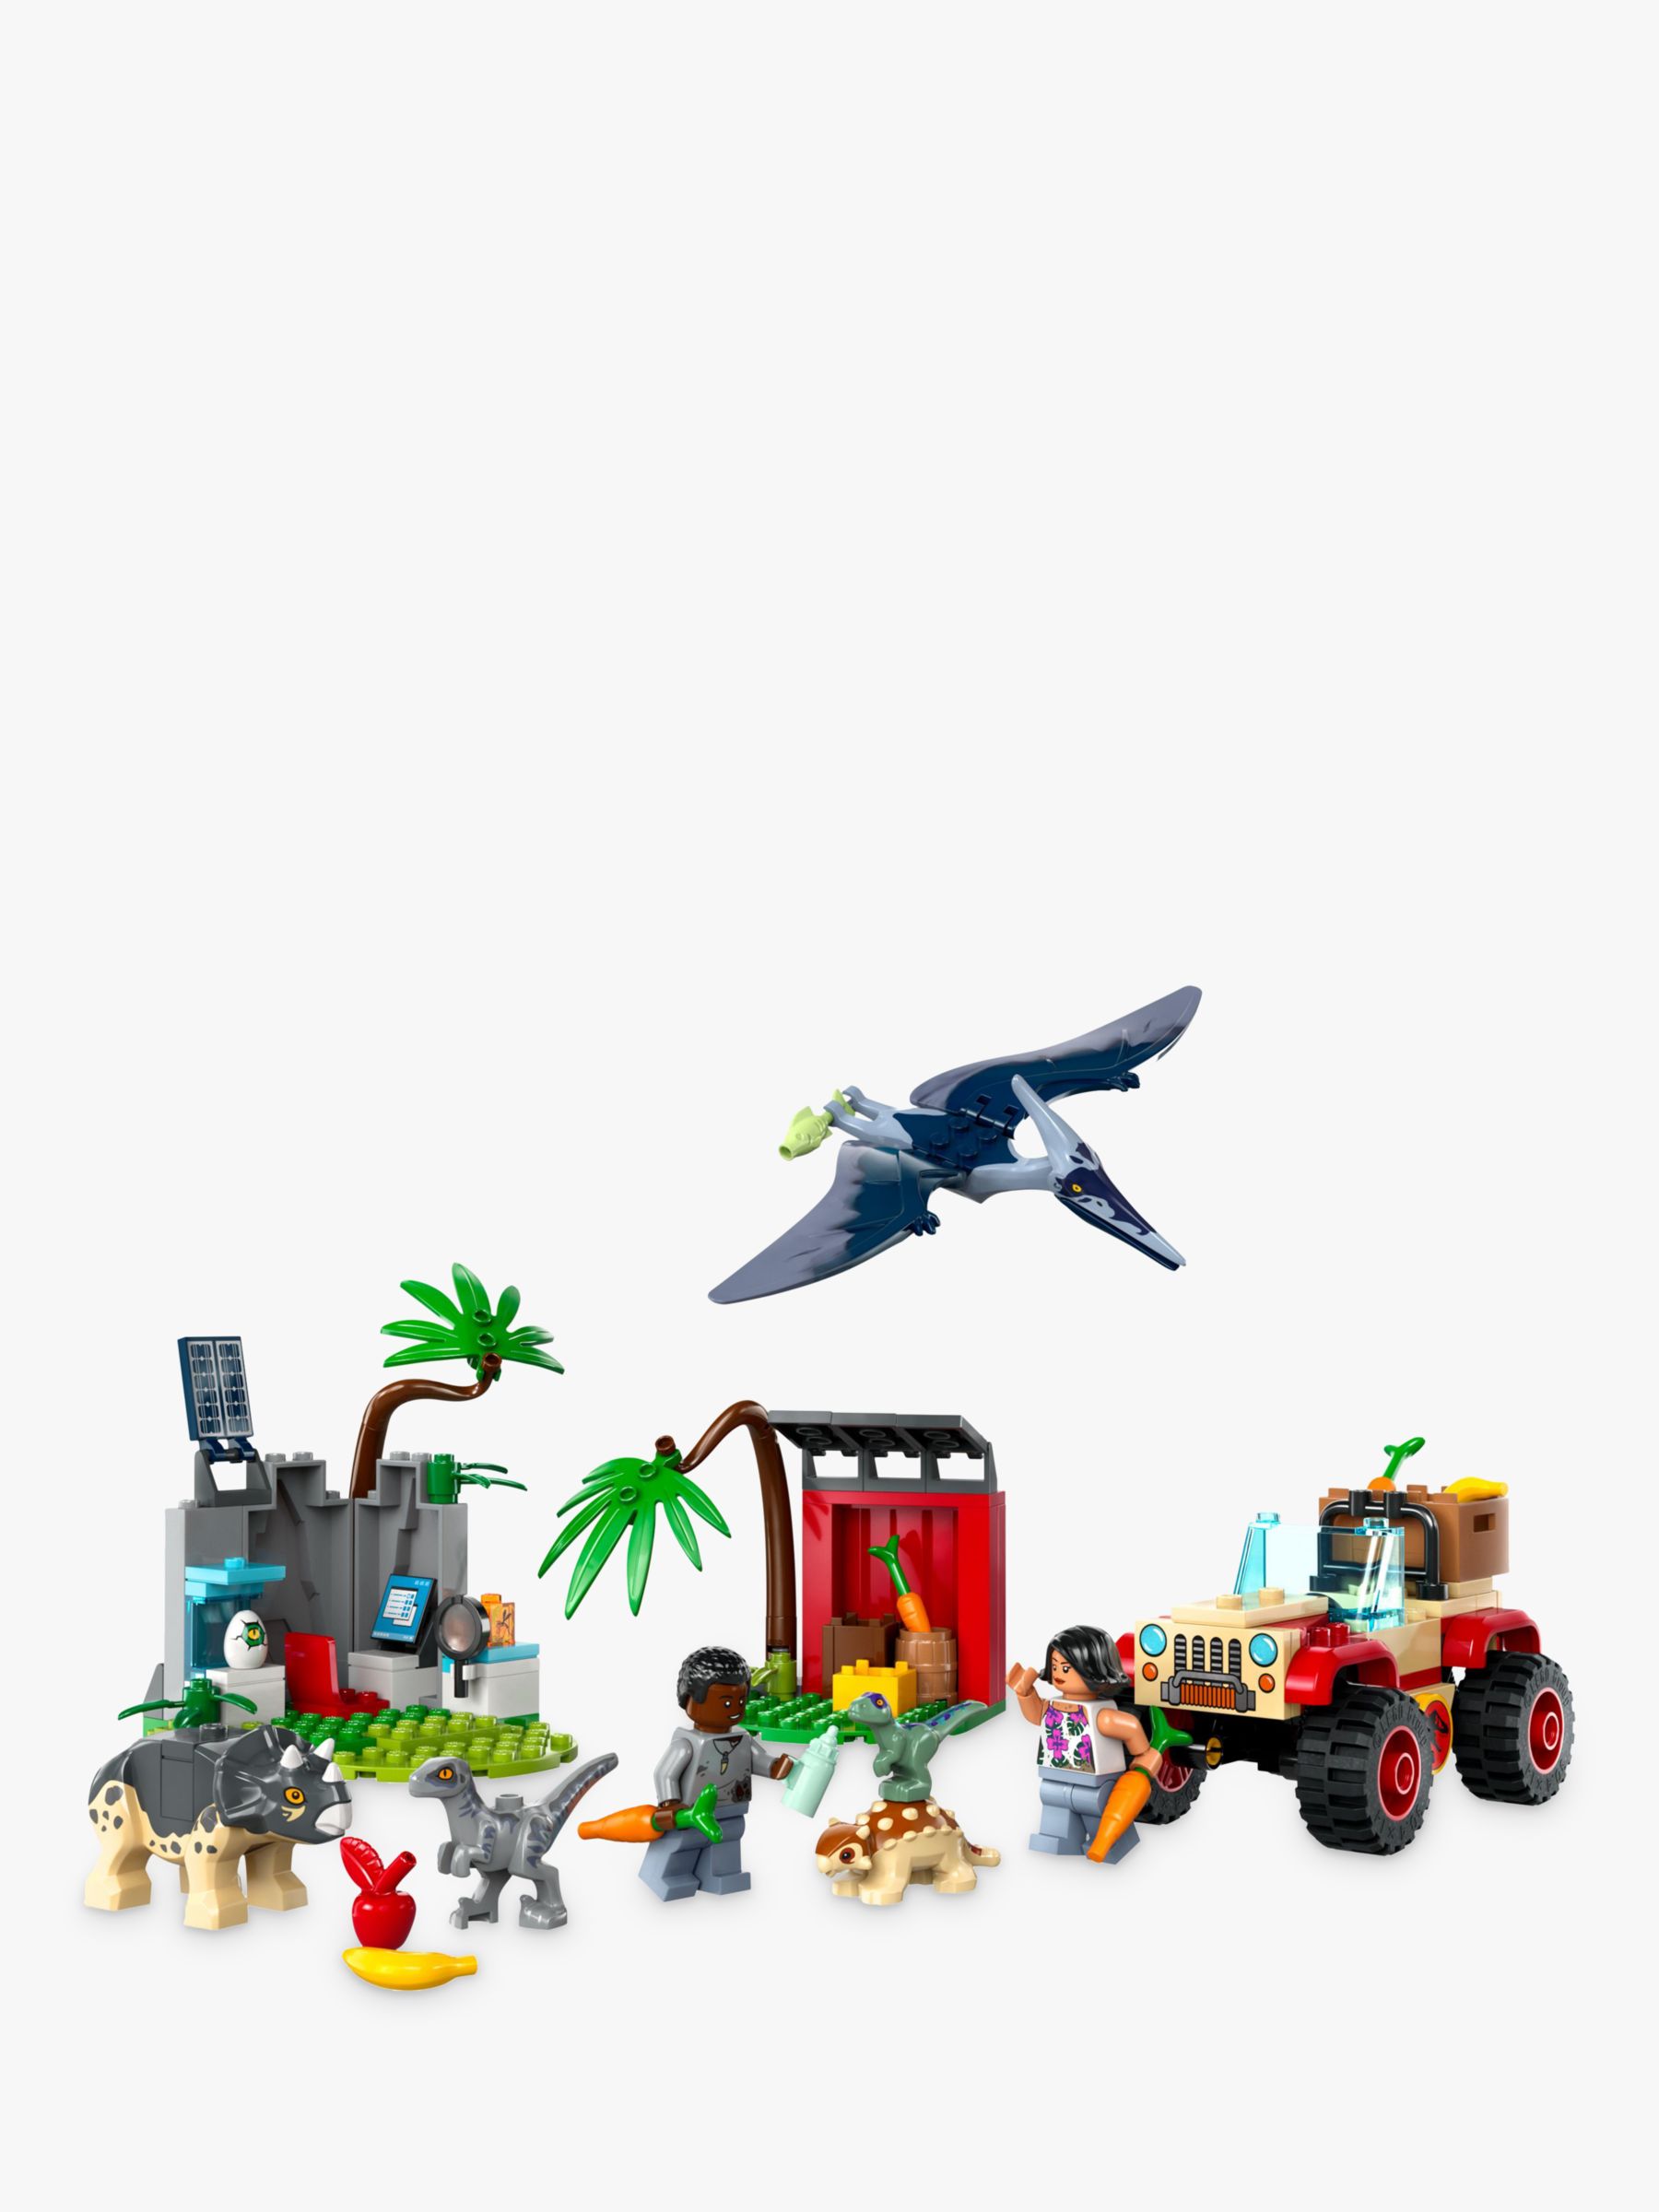 LEGO Jurassic World 76963 Baby Dinosaur Rescue Centre Set